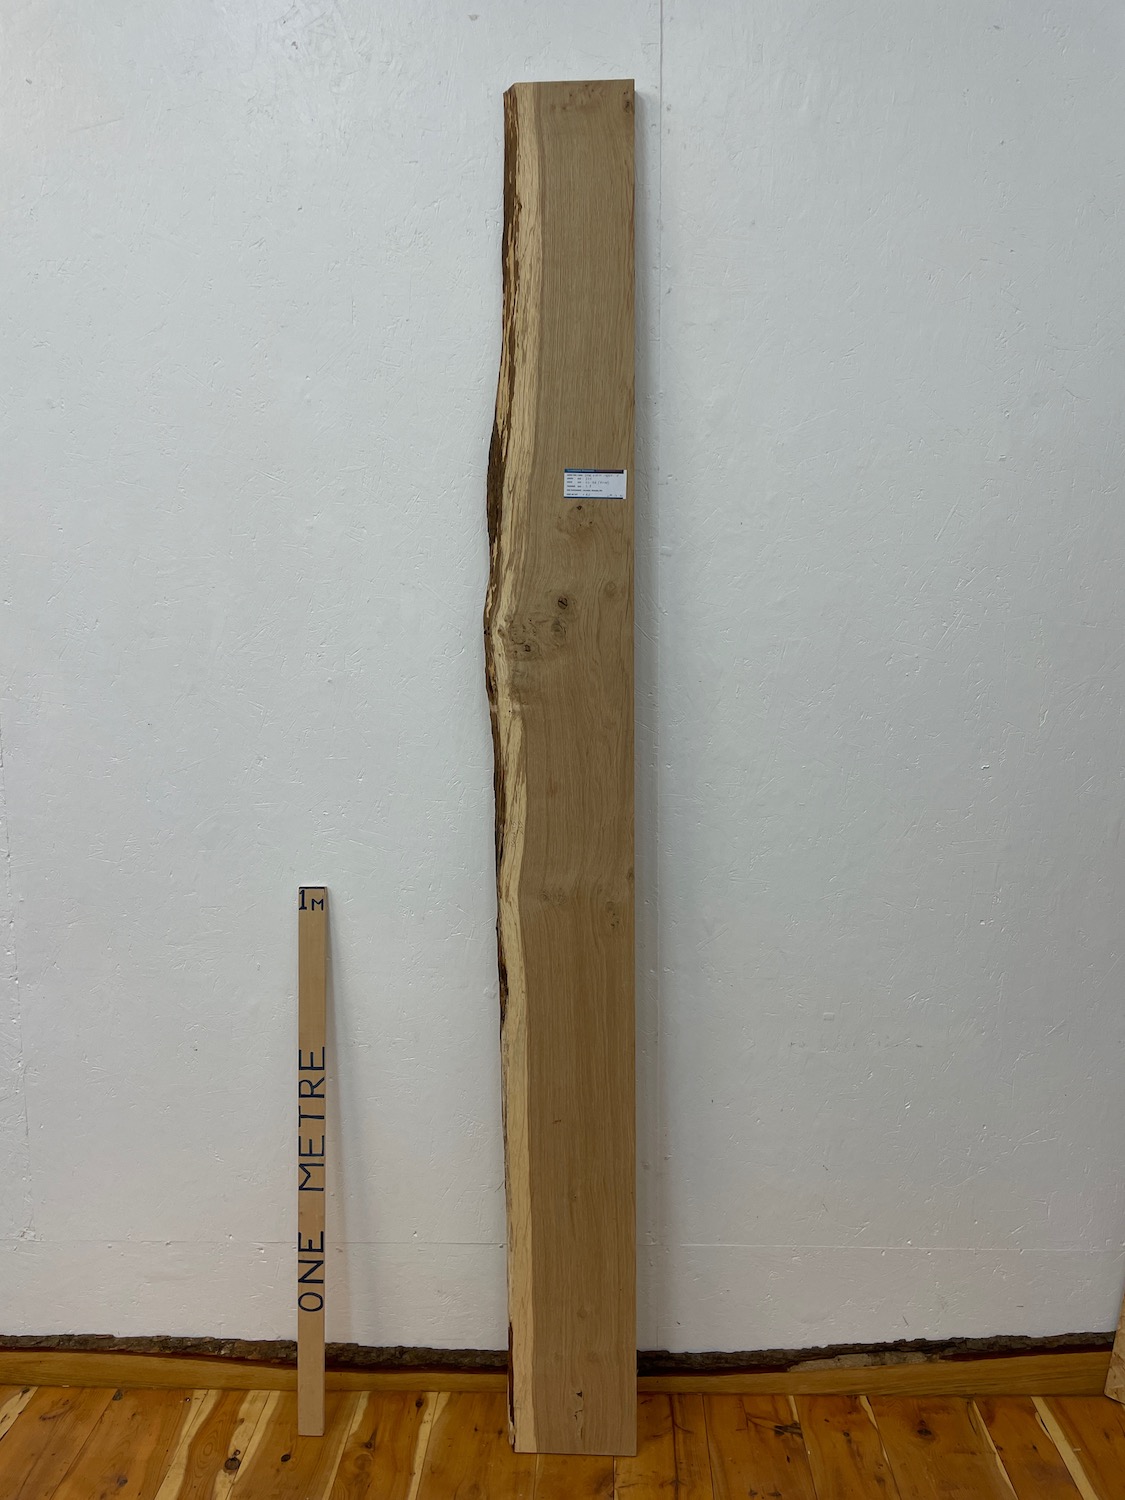 OAK Single Waney Natural Edge Board 1564A-15 Thickness 3.5cm Kiln Dried Planed & Thicknessed Seasoned Hardwood Live Edge